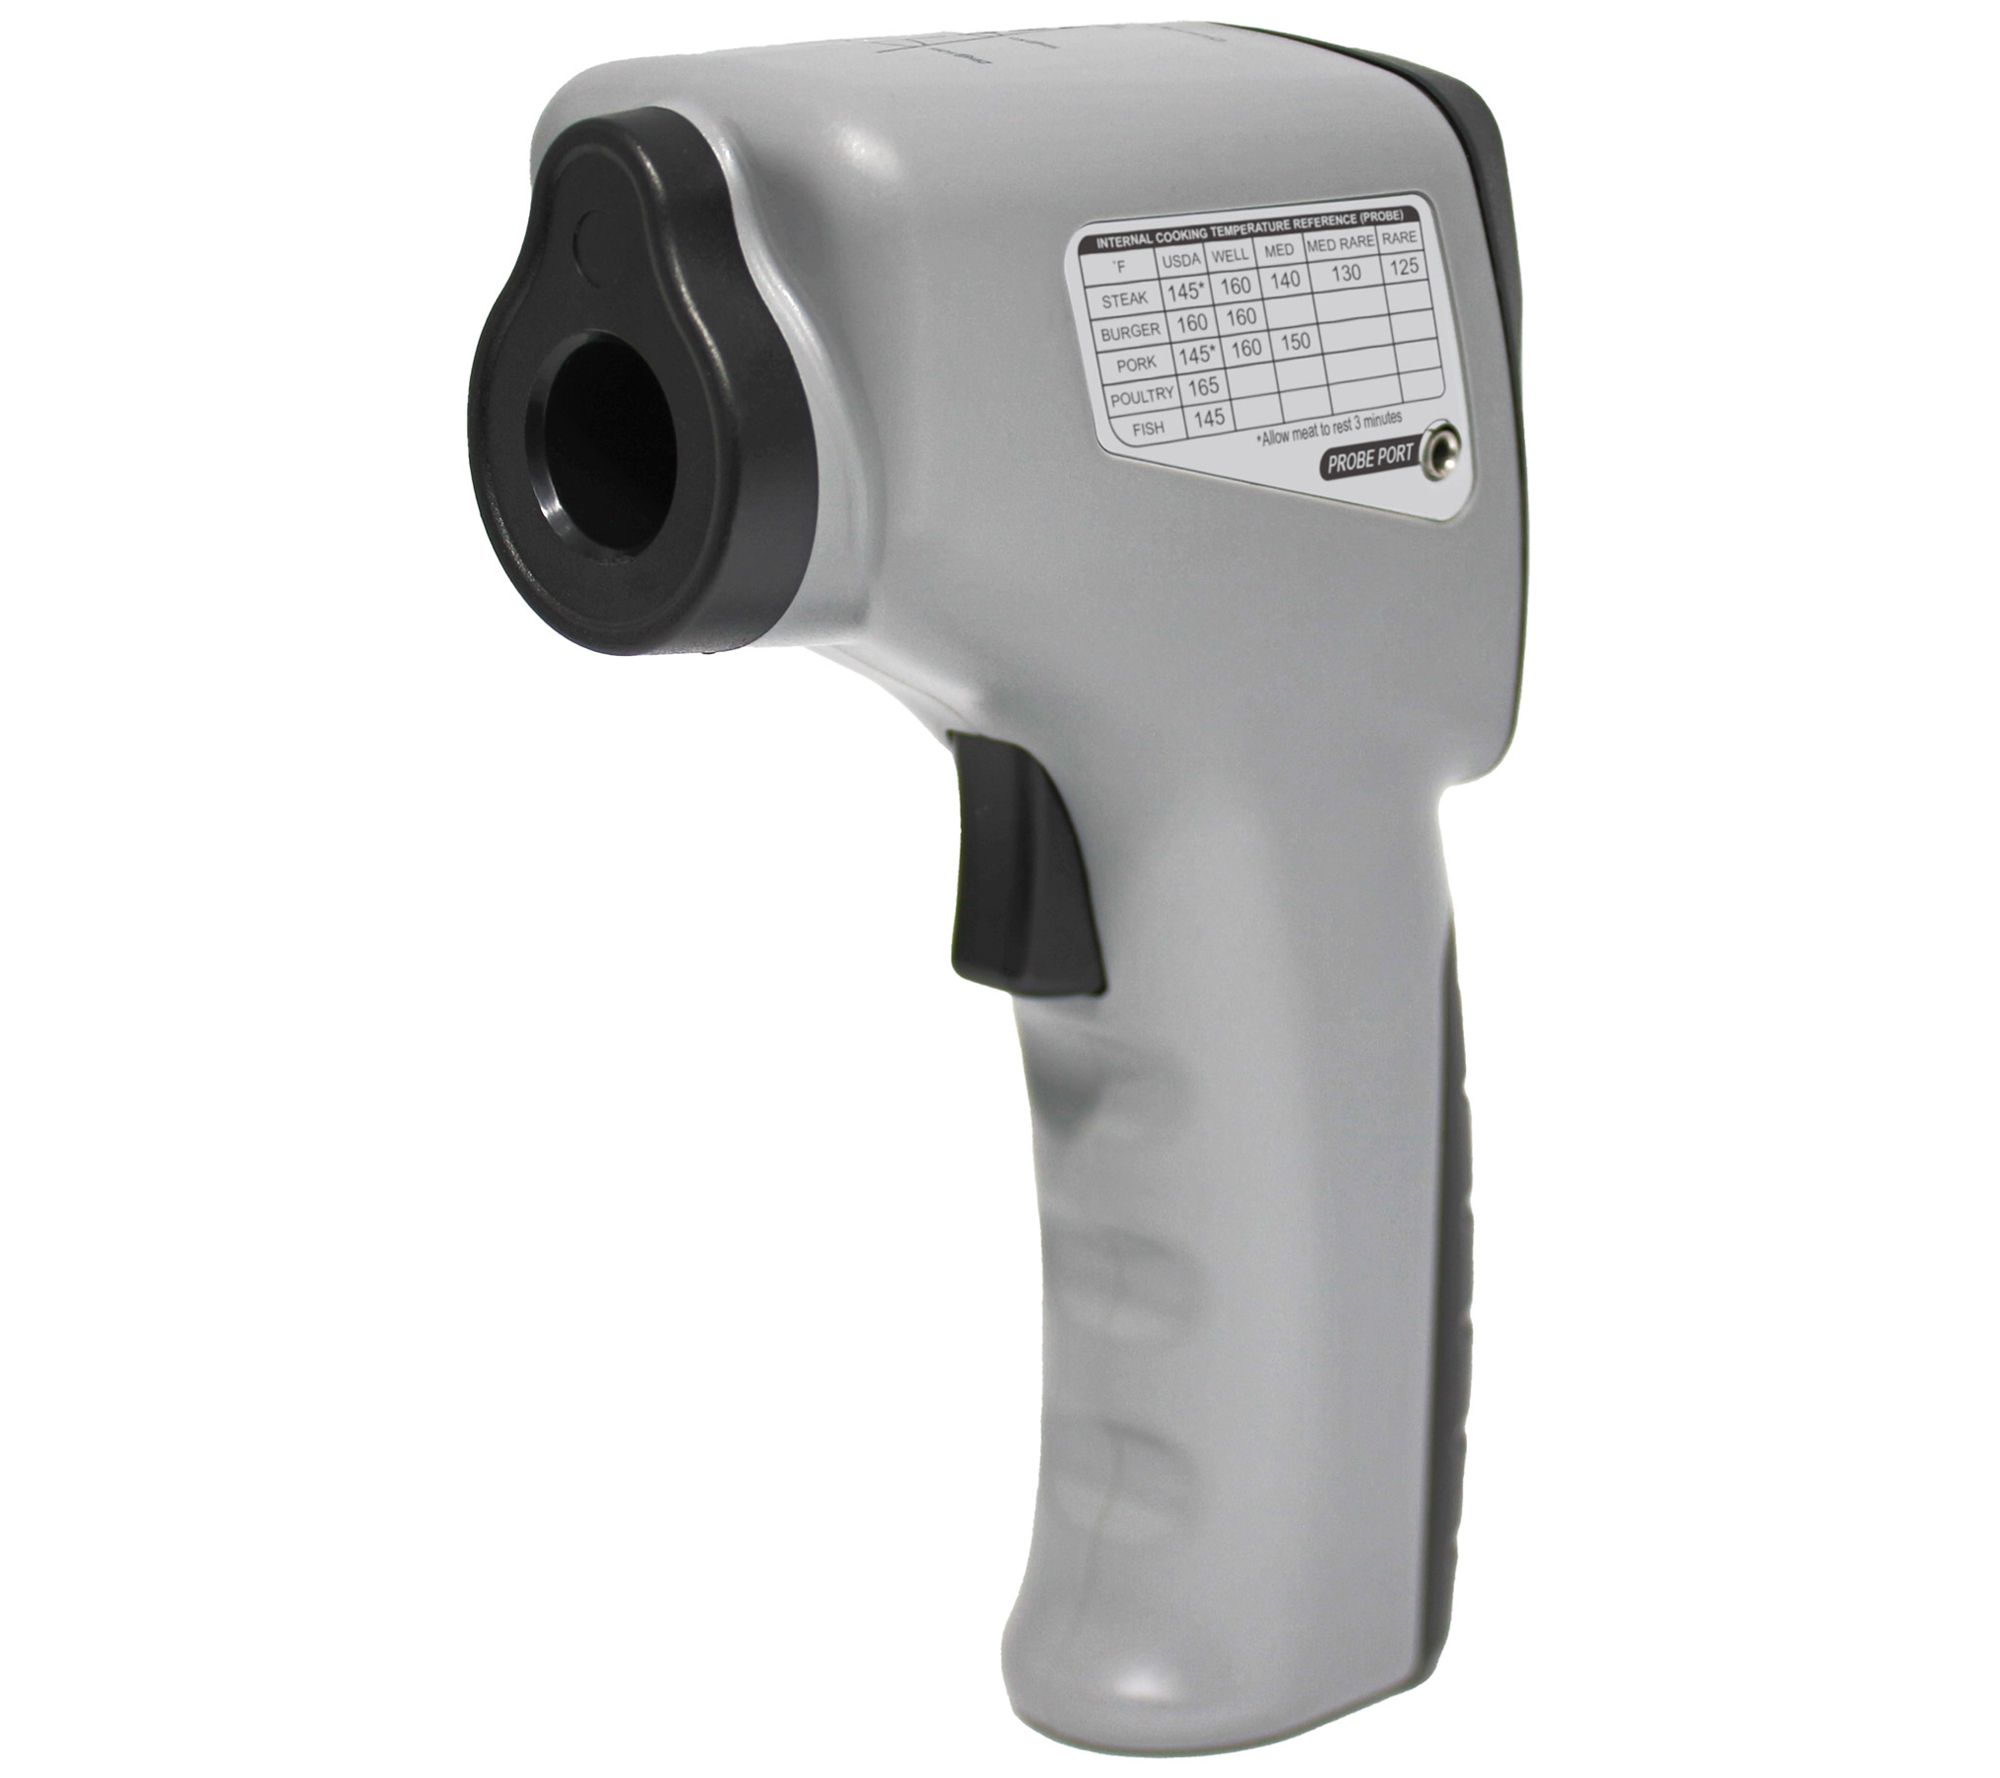 Escali SpotIR Infrared Surface & Probe Digital Thermometer 